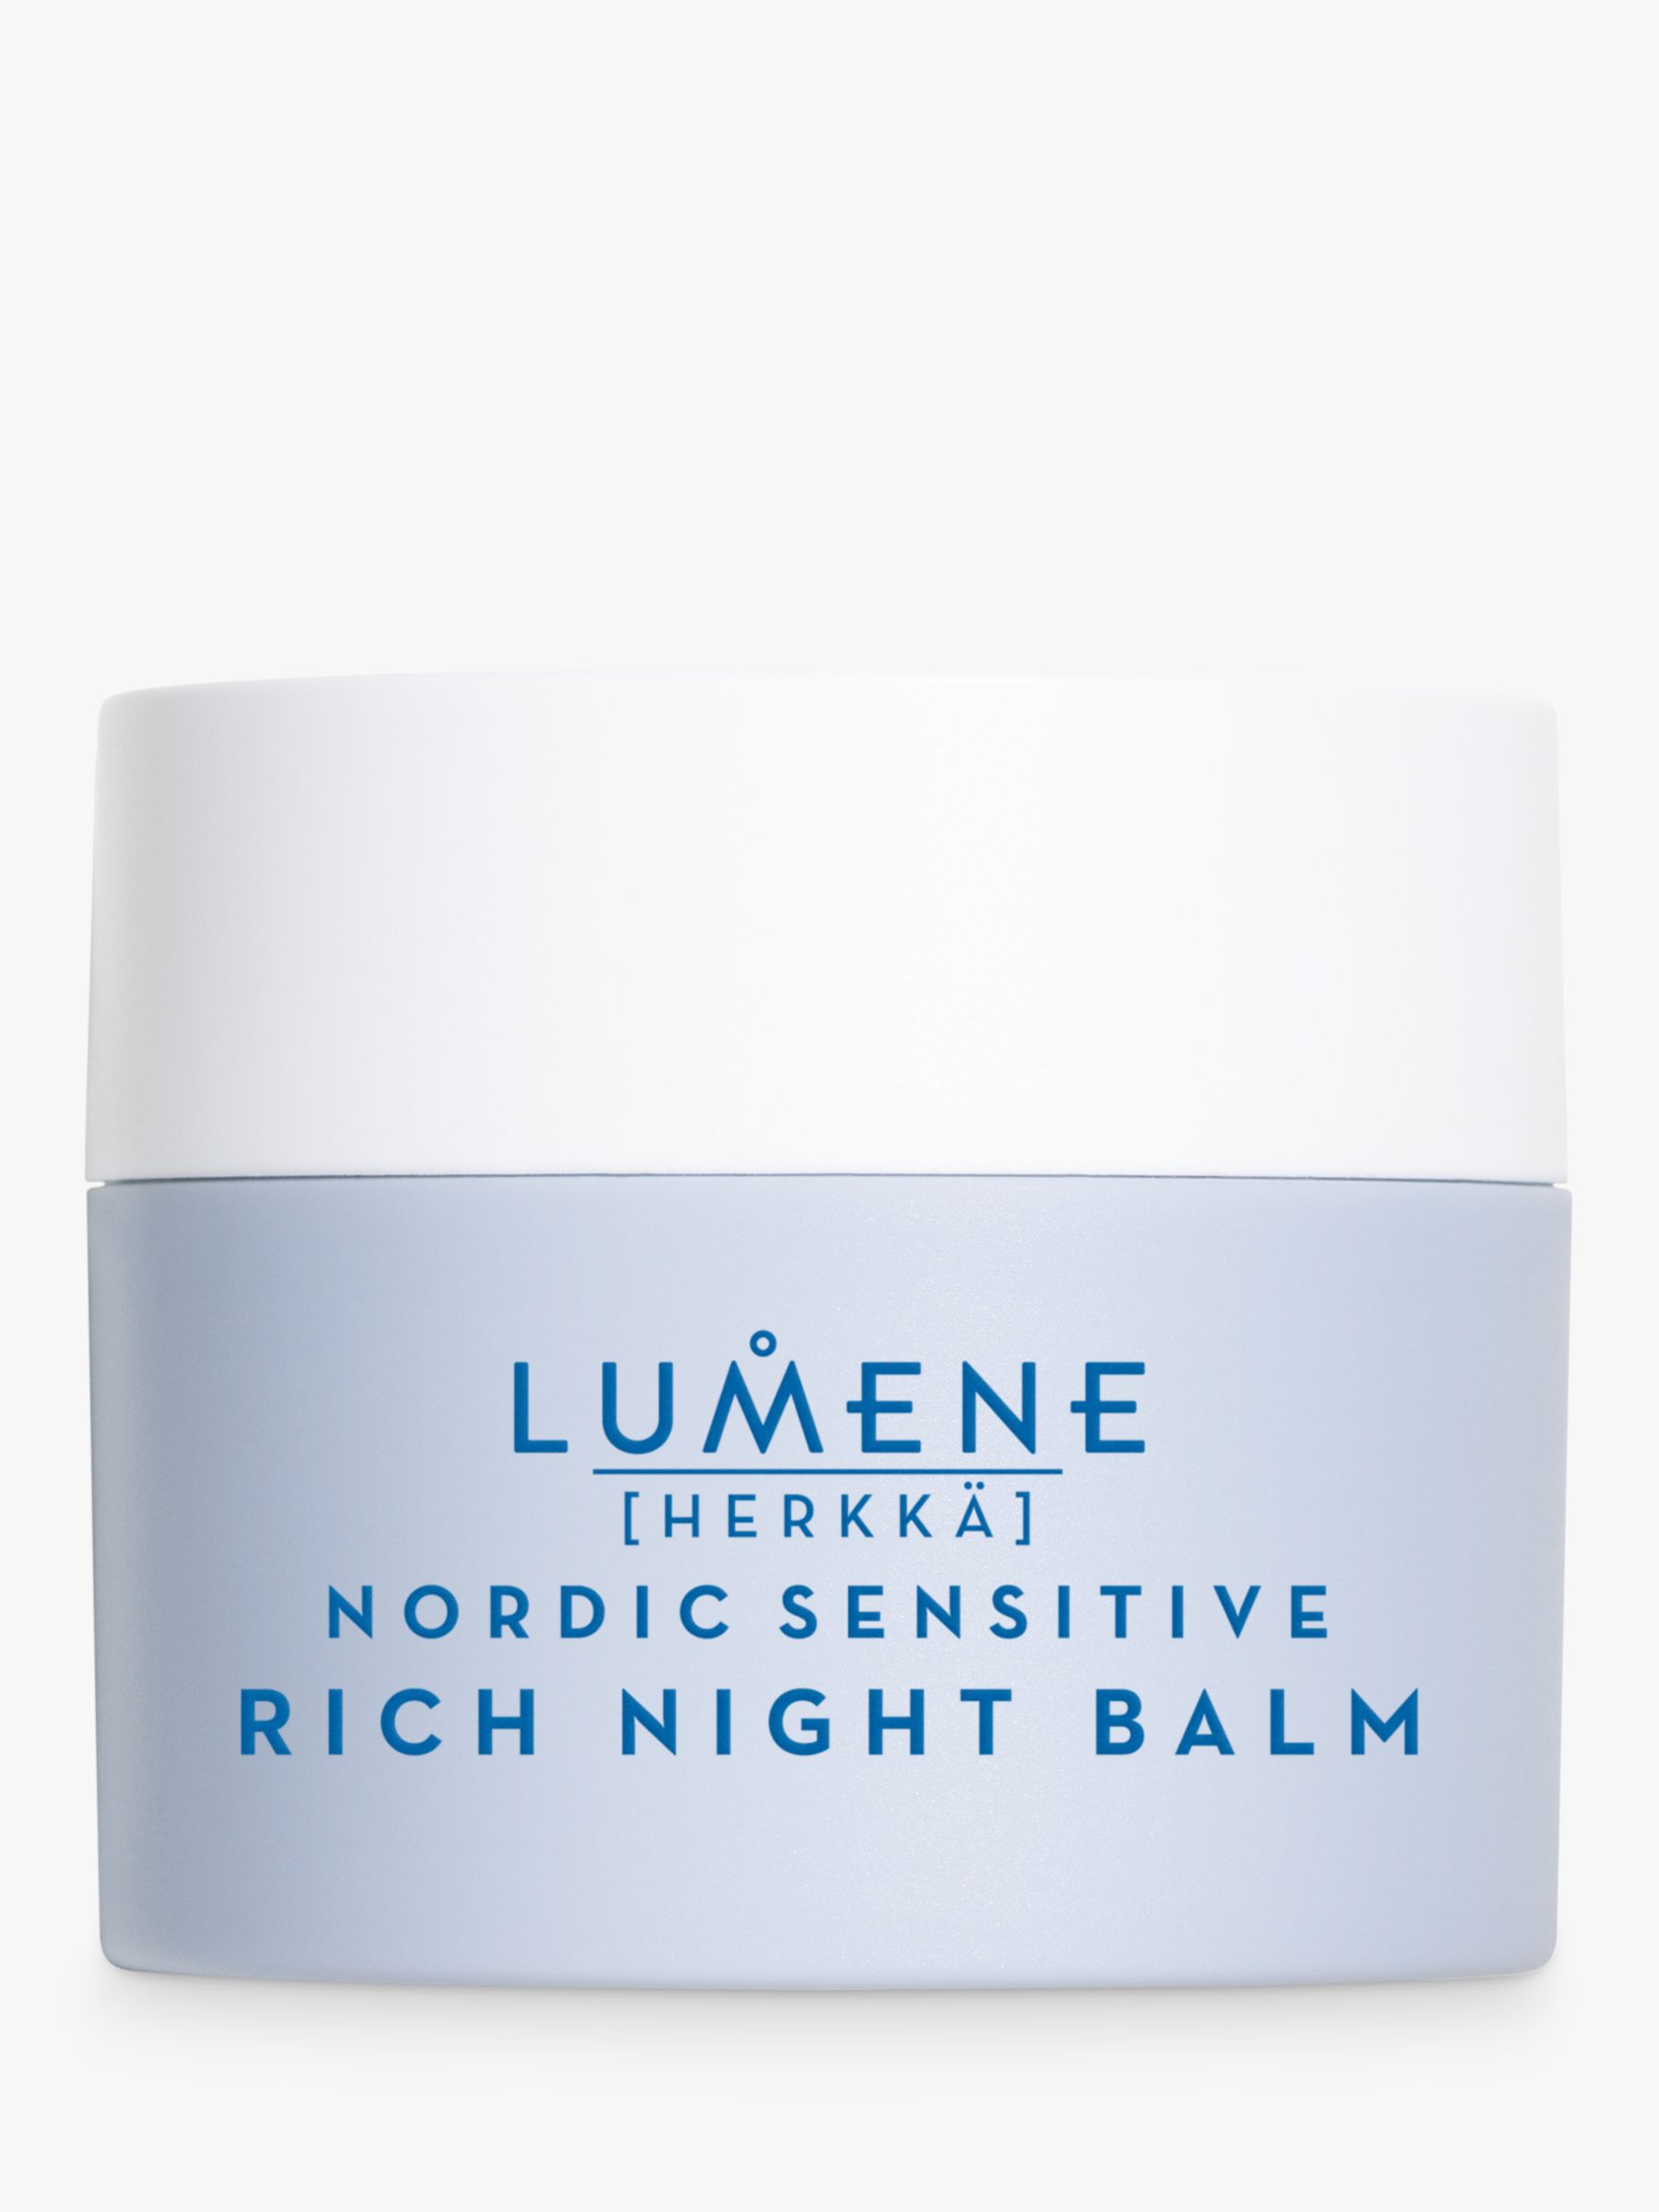 Lumene Nordic Sensitive Herkka Rich Night Balm, 50ml 1